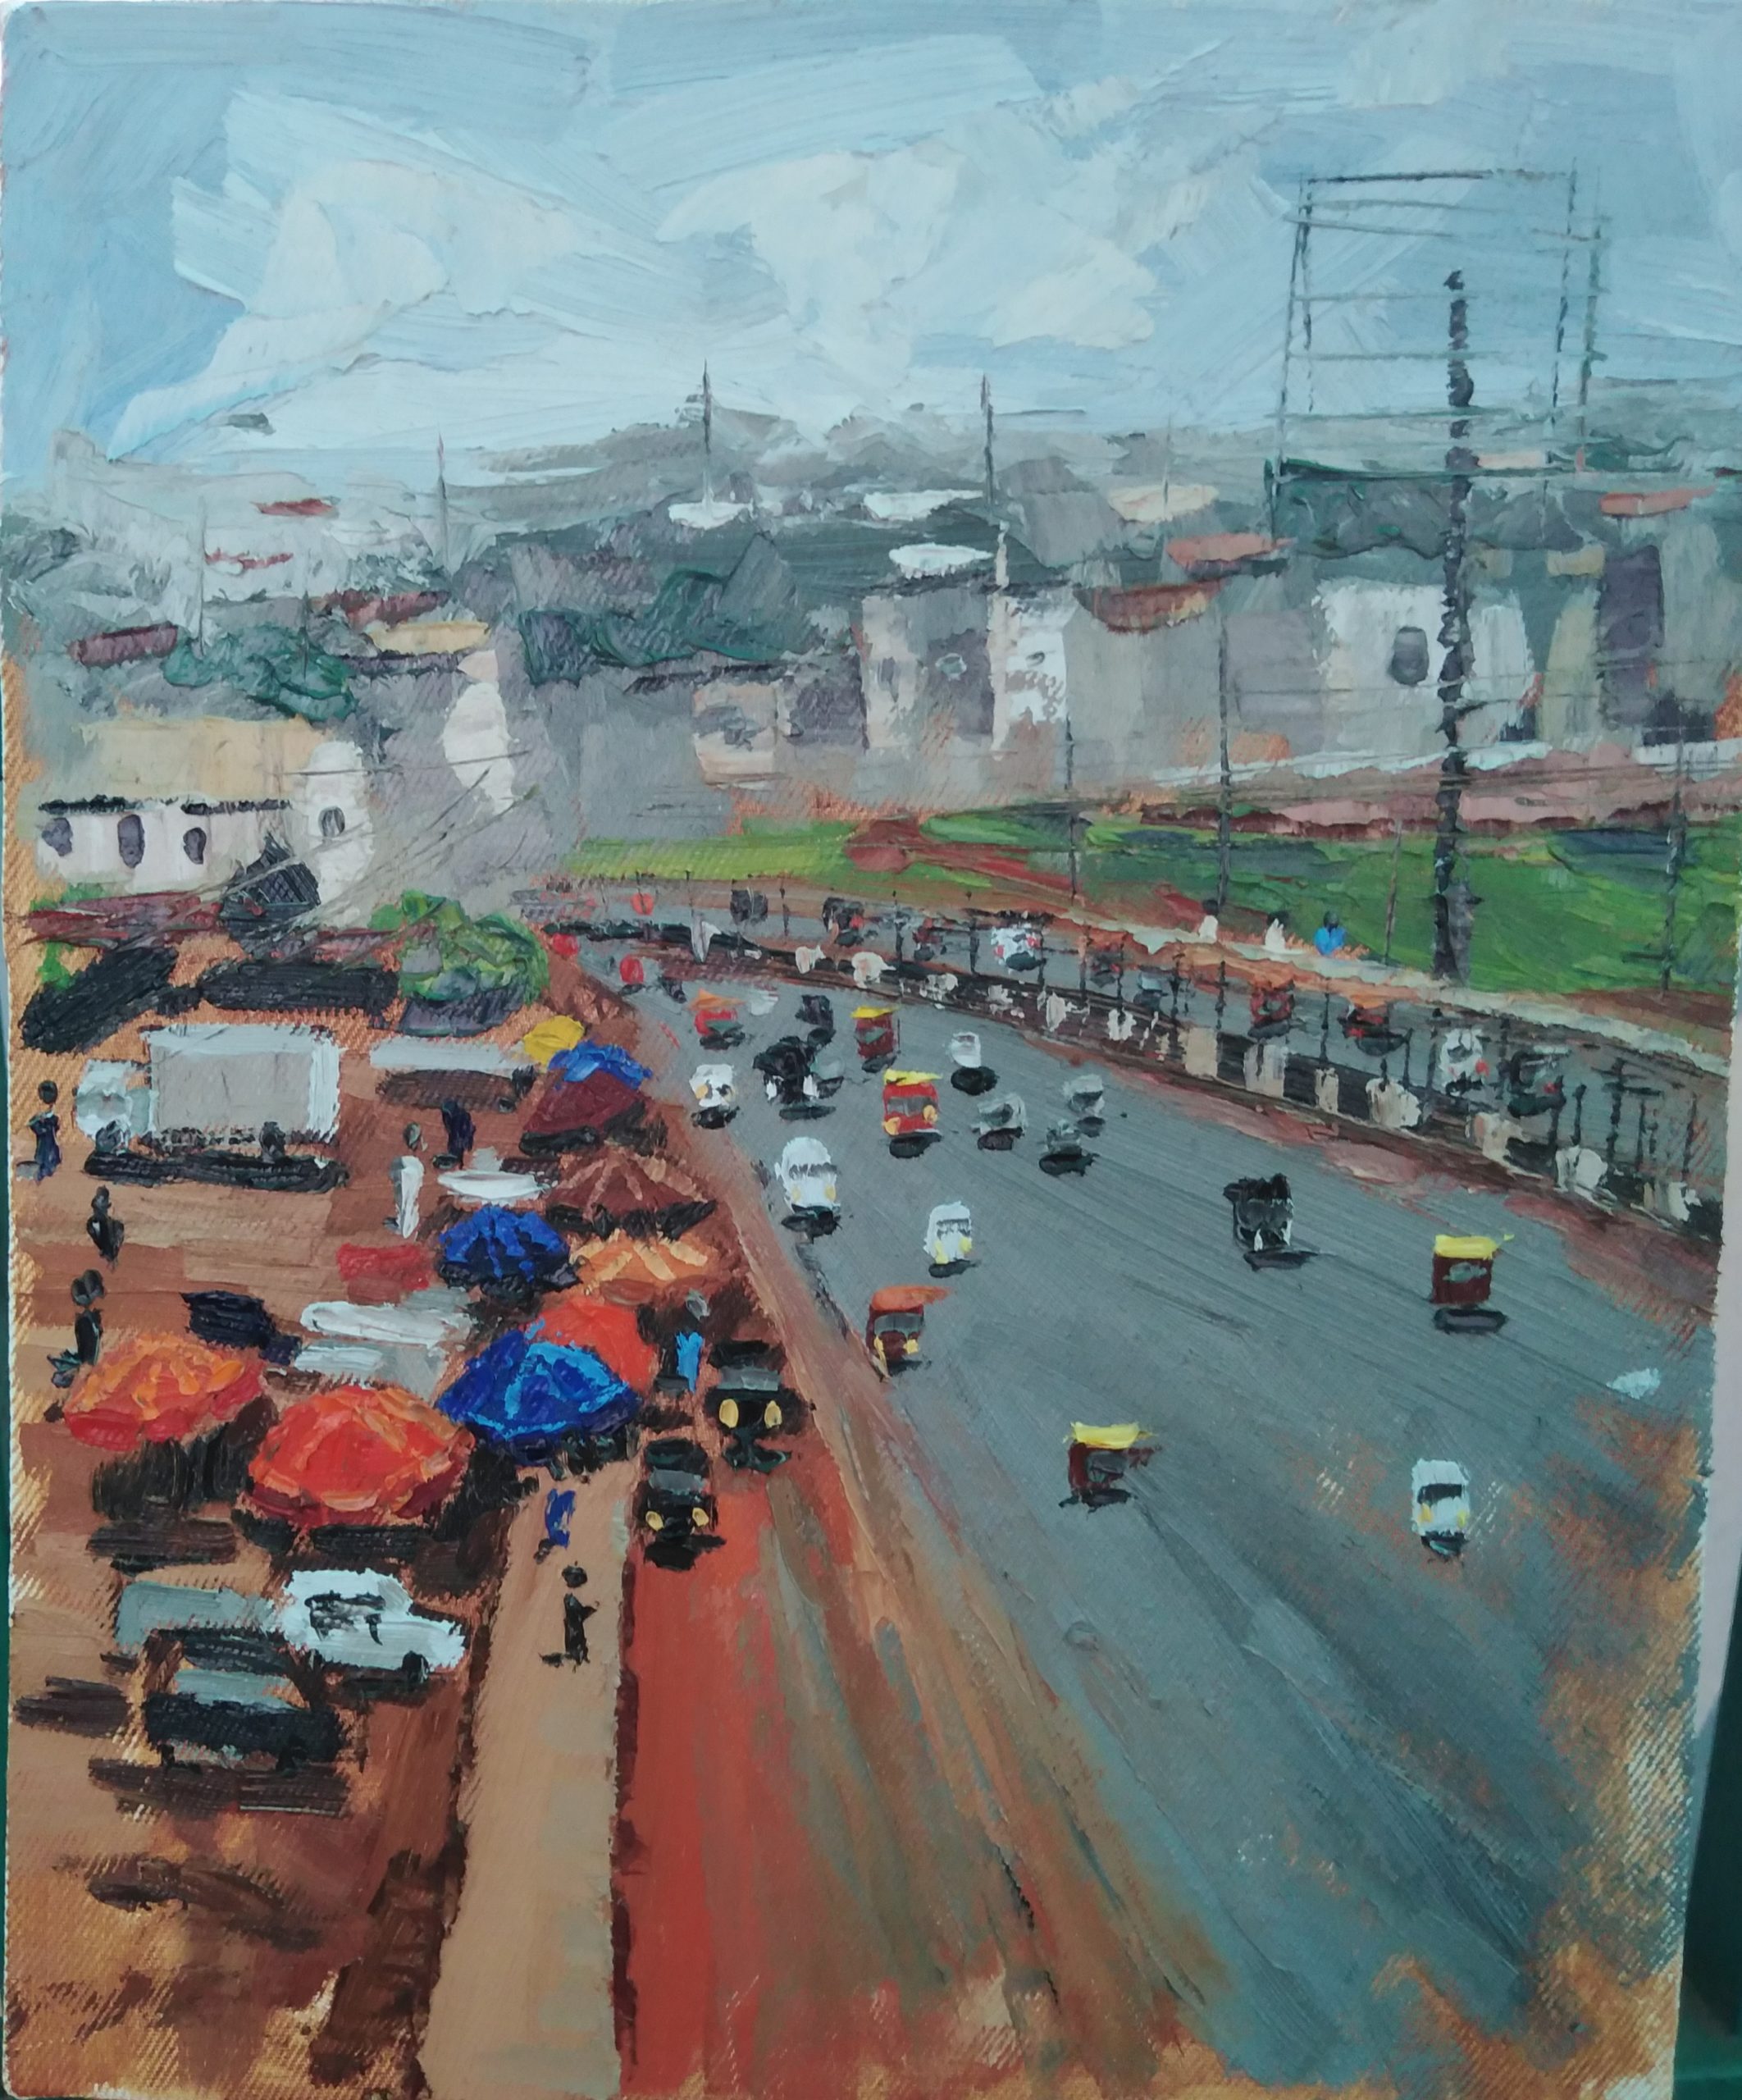 plein air painting Nigeria - Edak Young, "Main Gate," oil on canvas, 13 x 16 in.